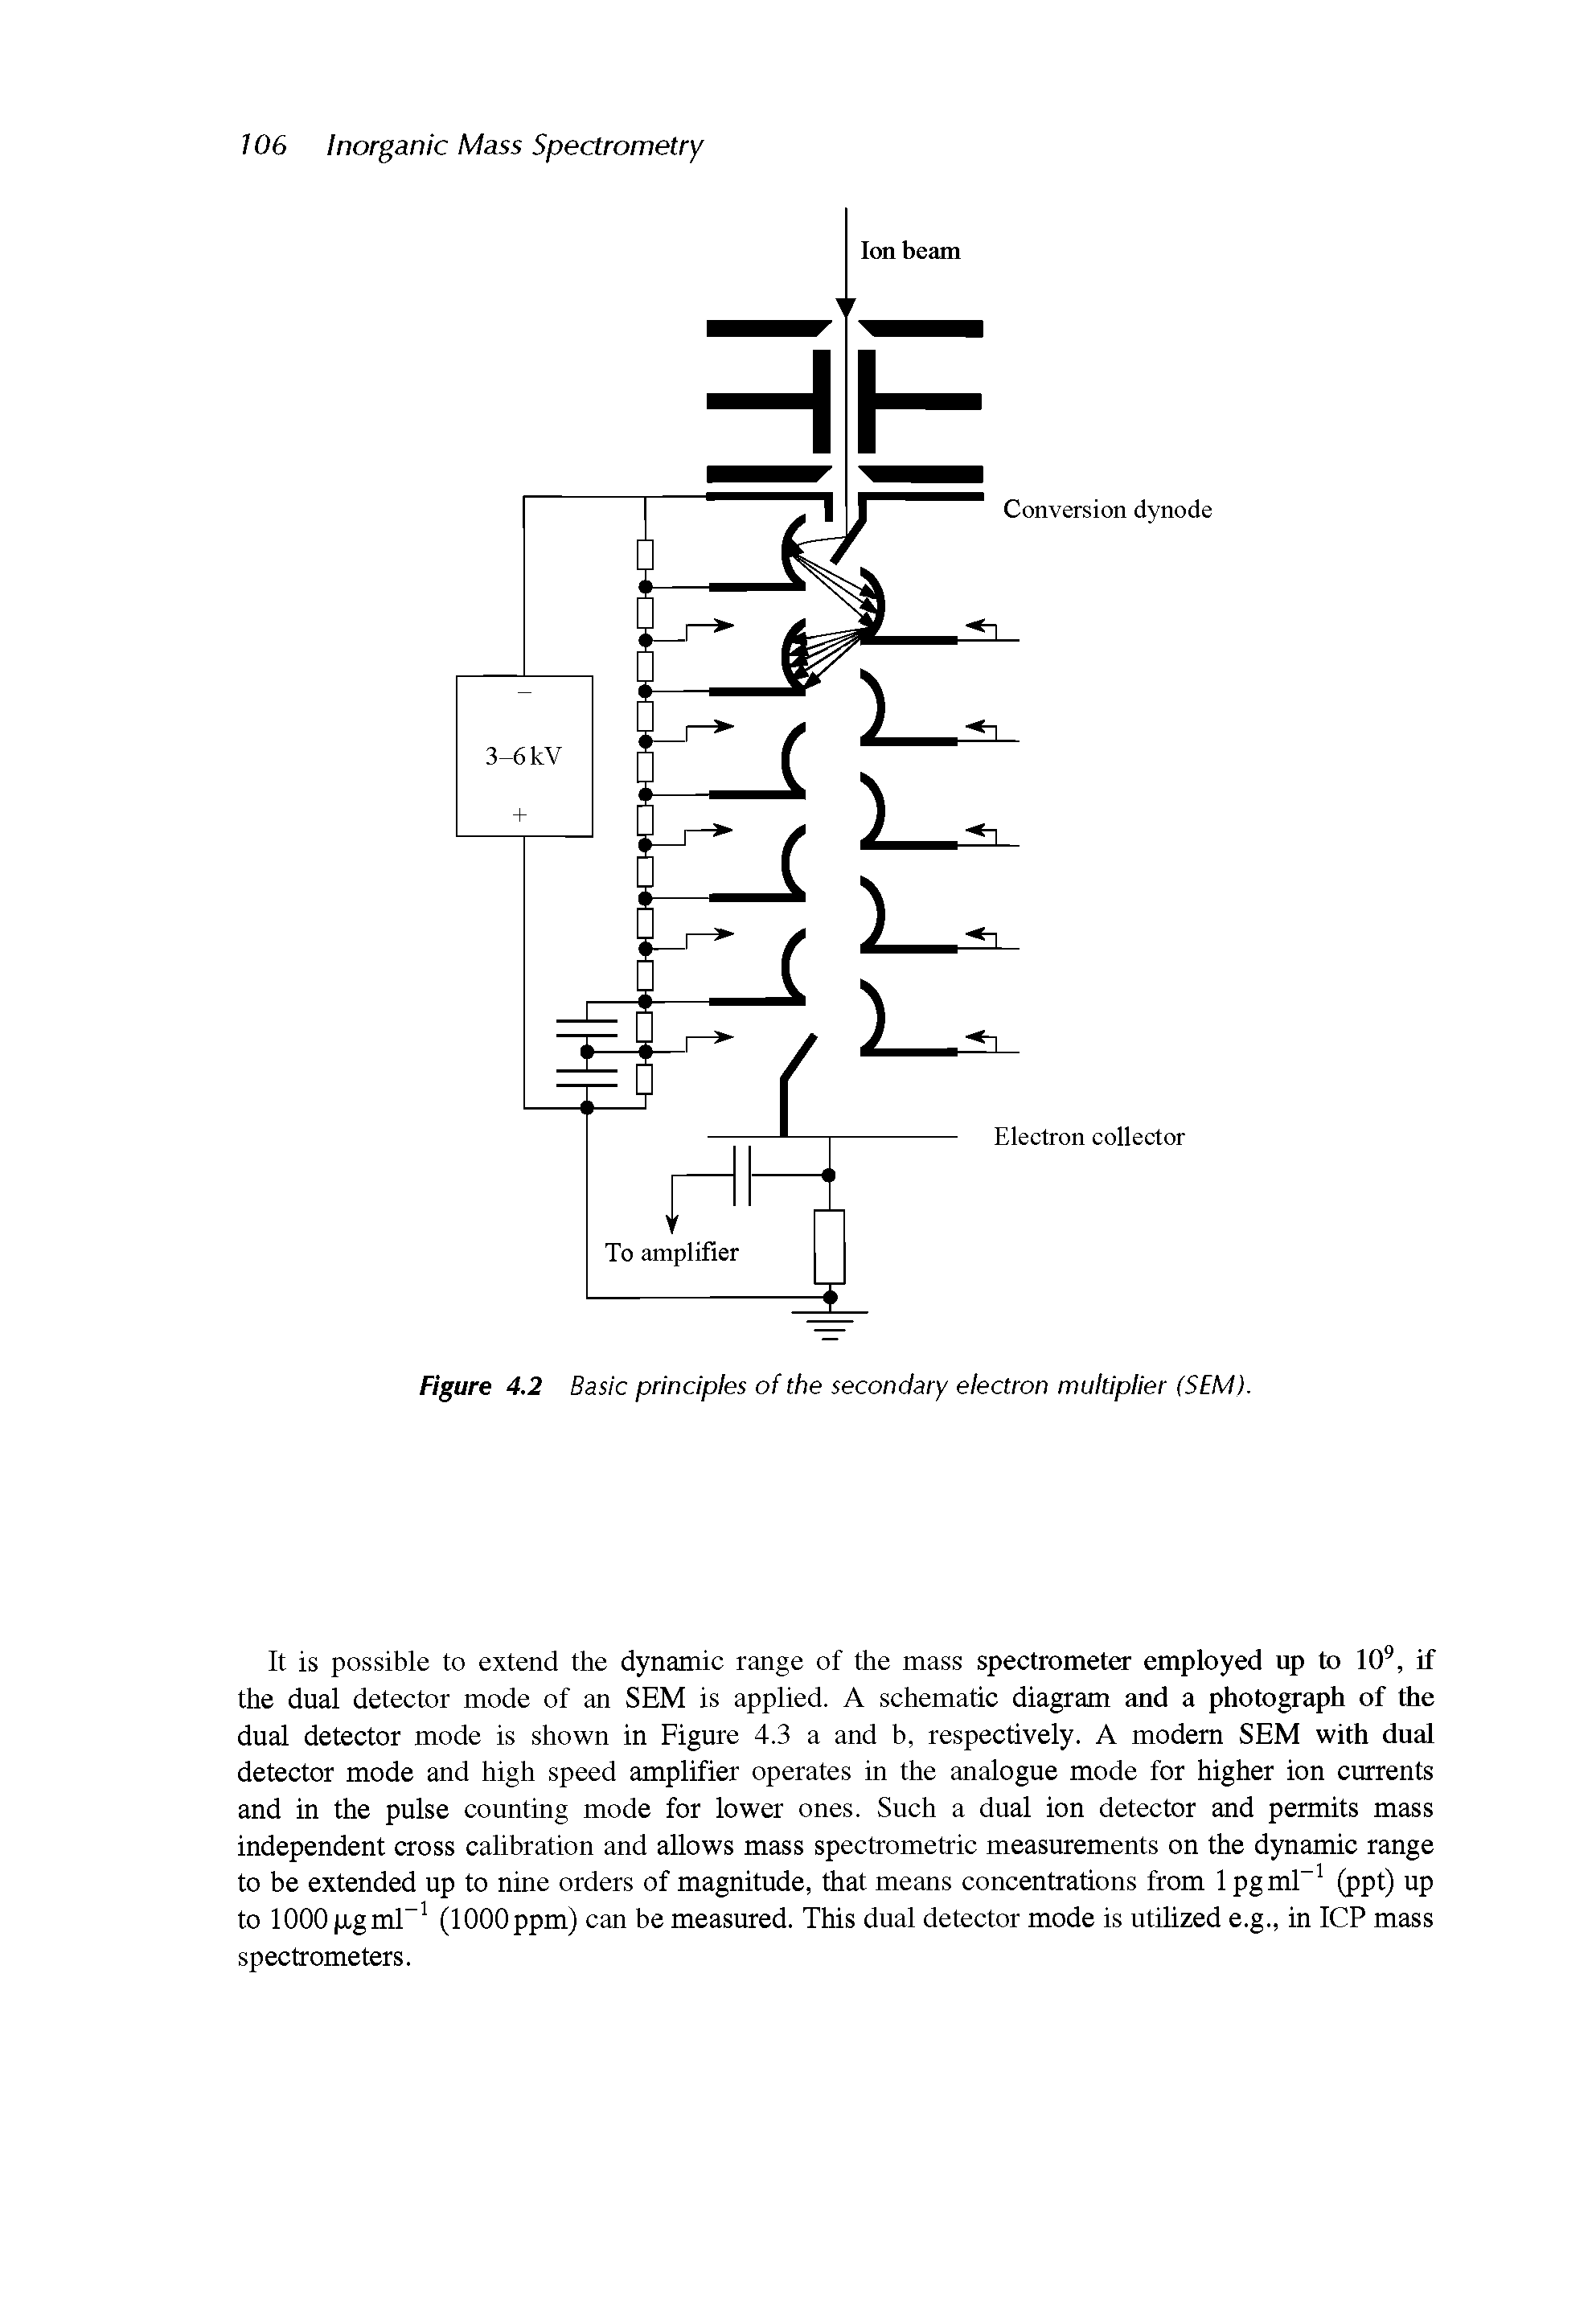 Figure 4.2 Basic principles of the secondary electron multiplier (SEM).